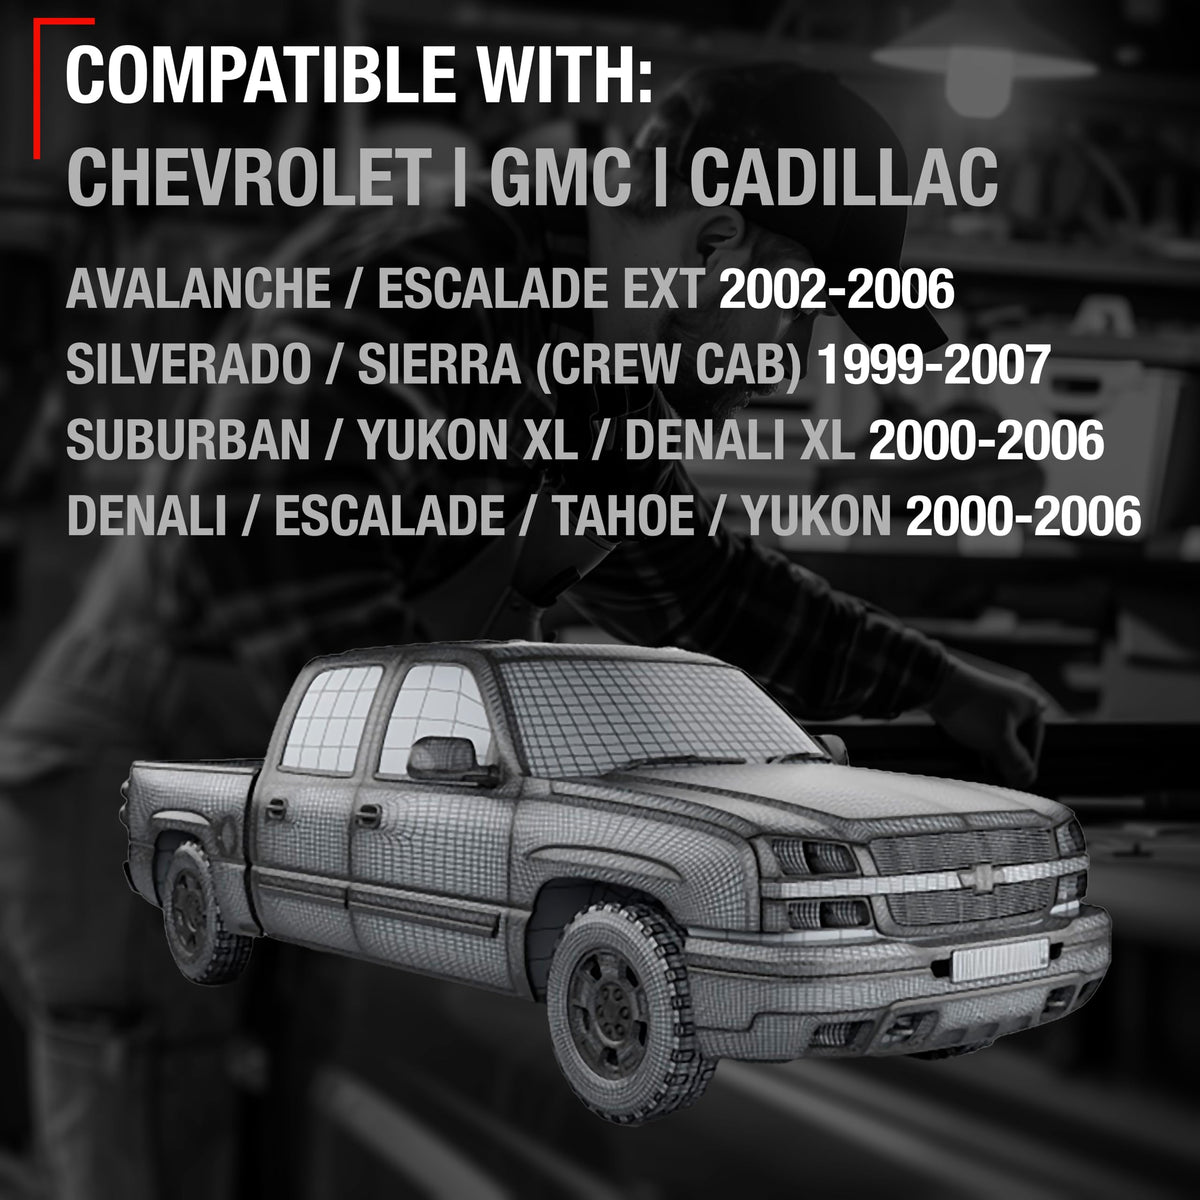 Power Window Regulator with Motor Assembly, Rear Right - Compatible with 1999-2007 Chevrolet Silverado Suburban Tahoe; GMC Sierra Yukon; Cadillac Escalade - OEM 15206913